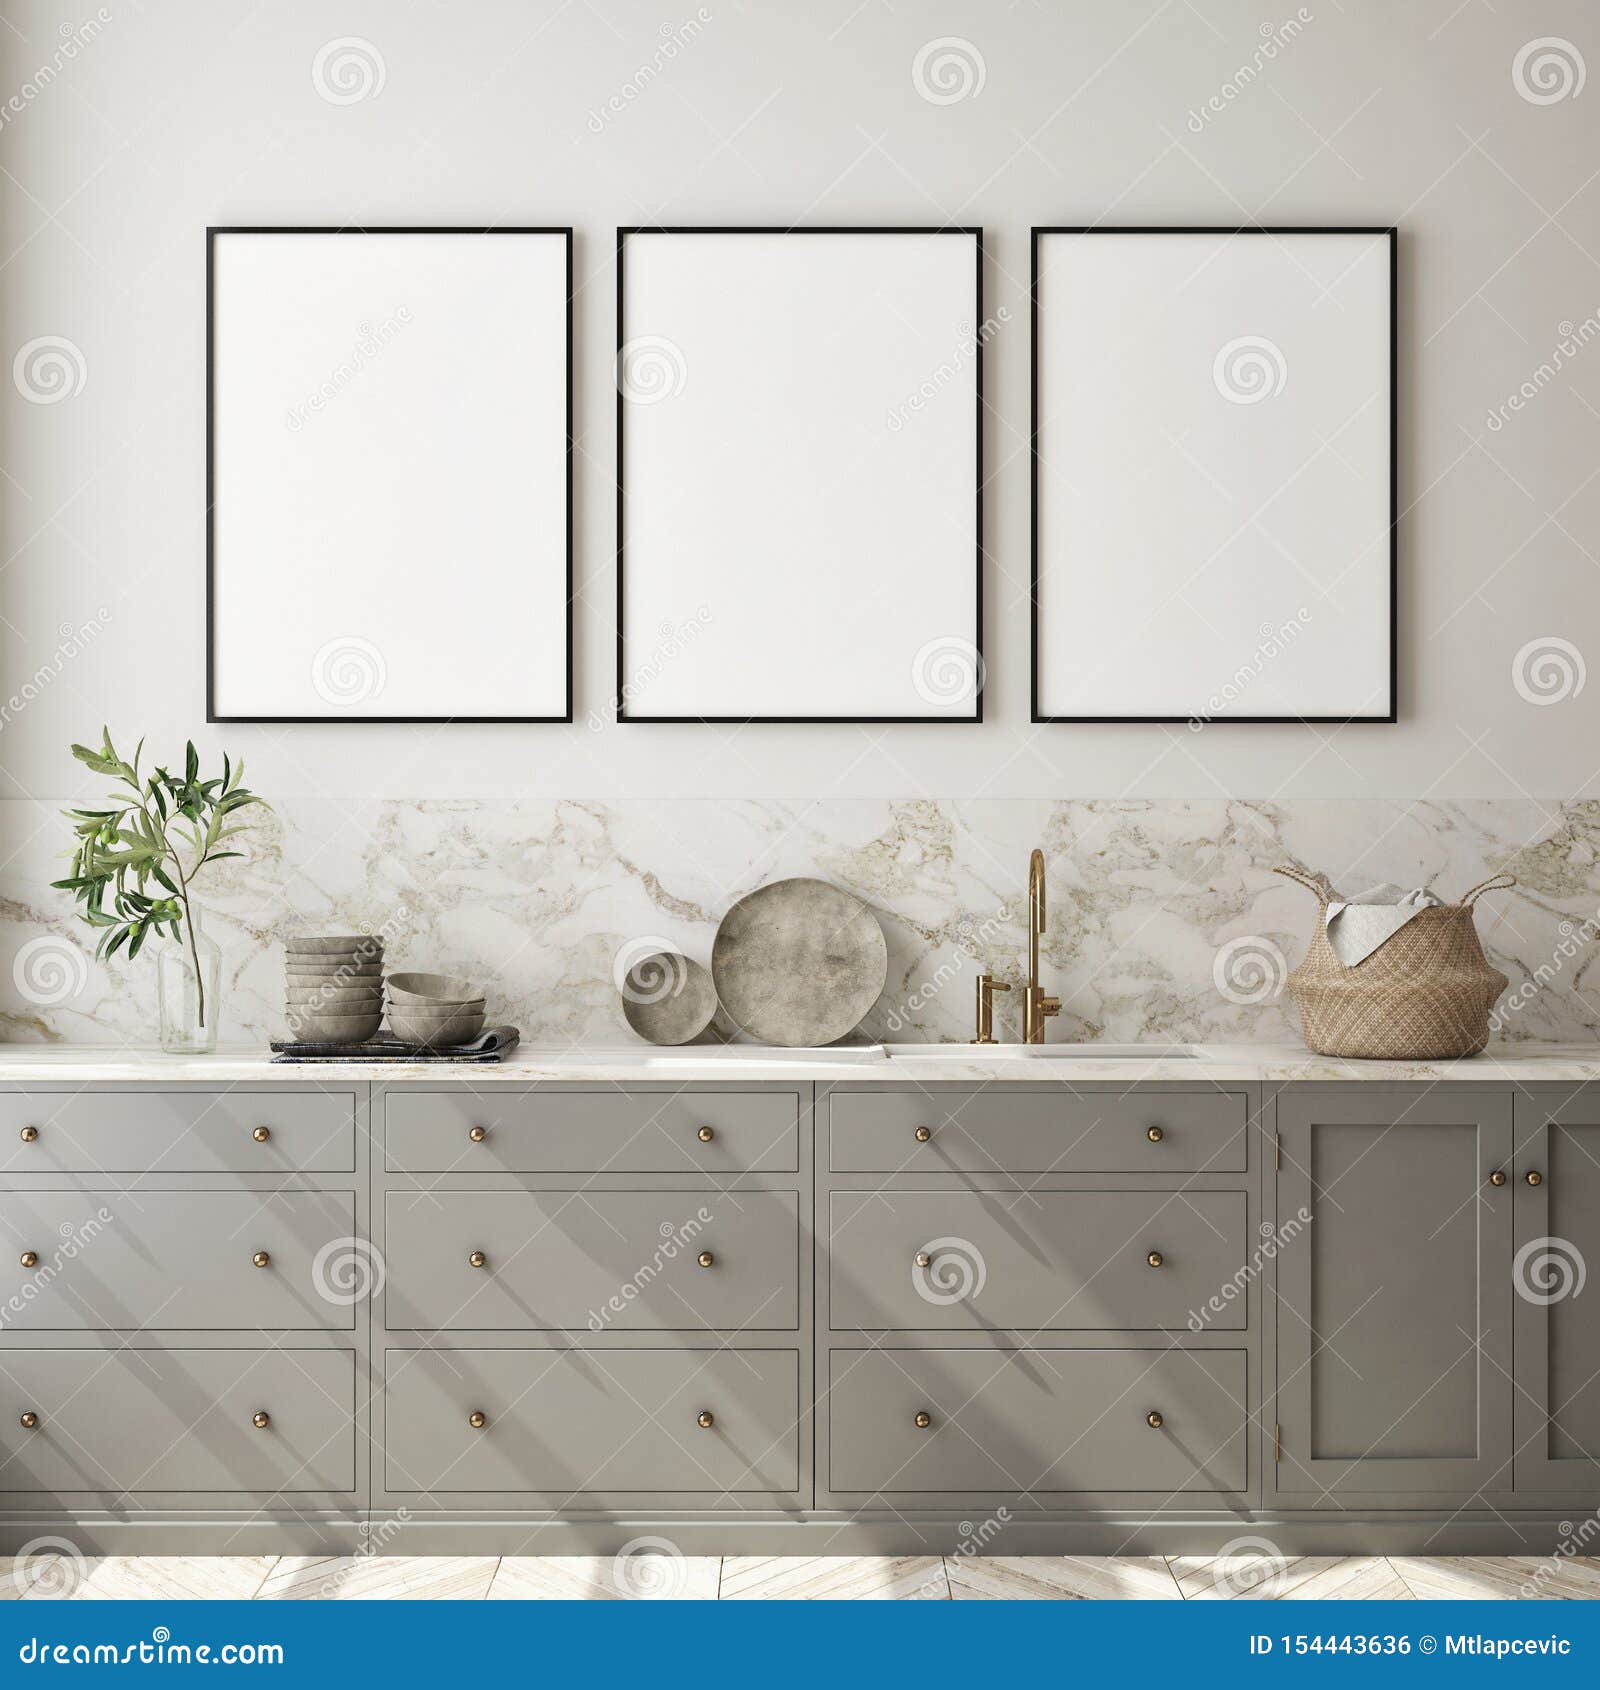 mock up poster frame in modern interior background, kitchen, scandinavian style, 3d render